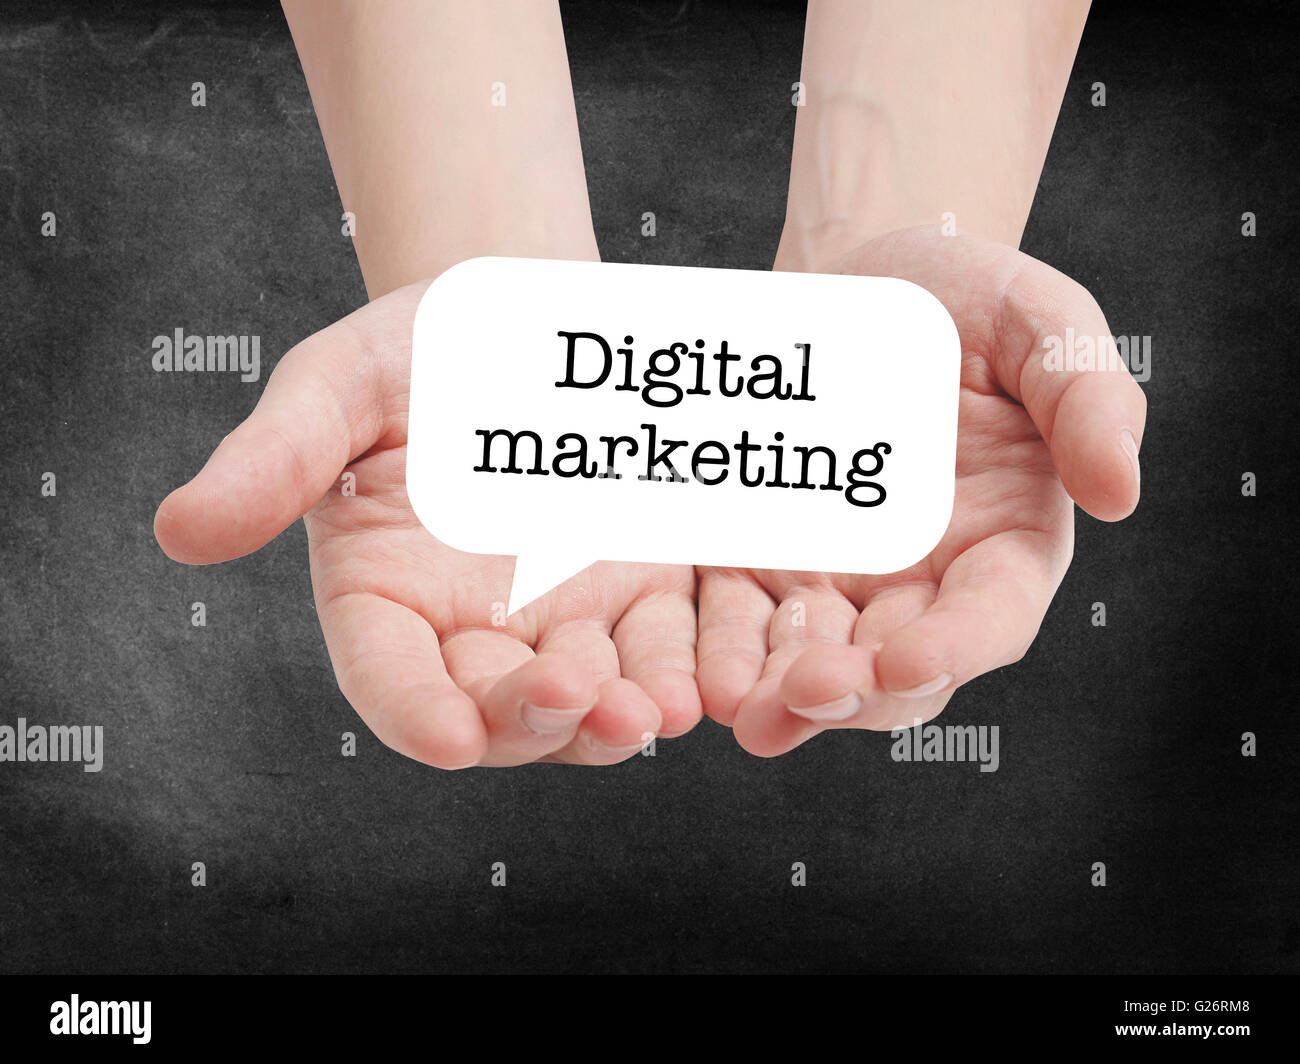 Digital marketing written on a speechbubble Stock Photo